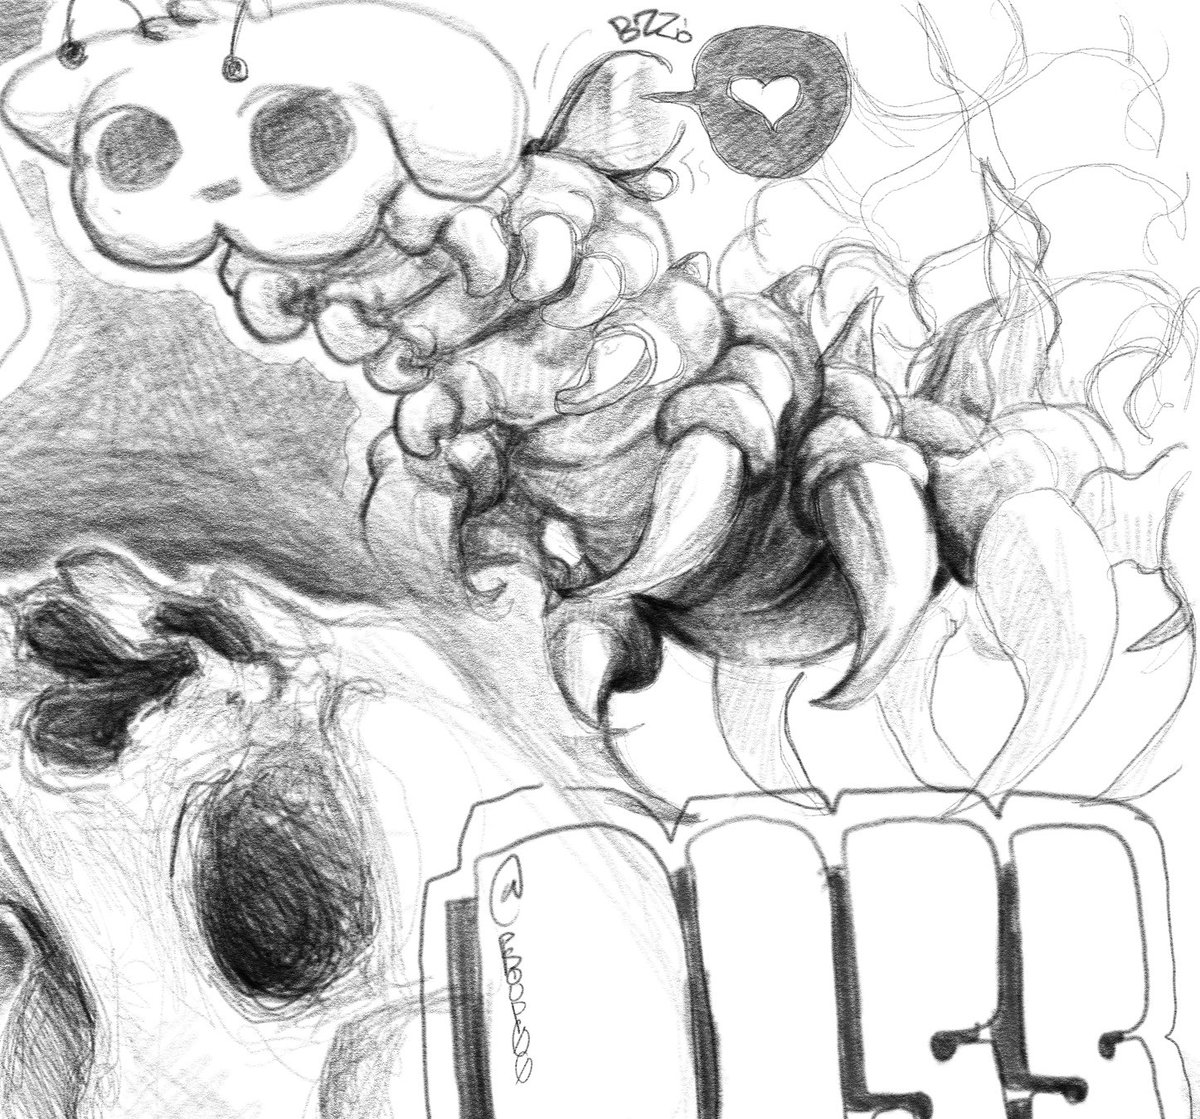 New doodles!!! #doodle #Doodles #doodleart #SkullgirlsMobile #Skullz #Bears